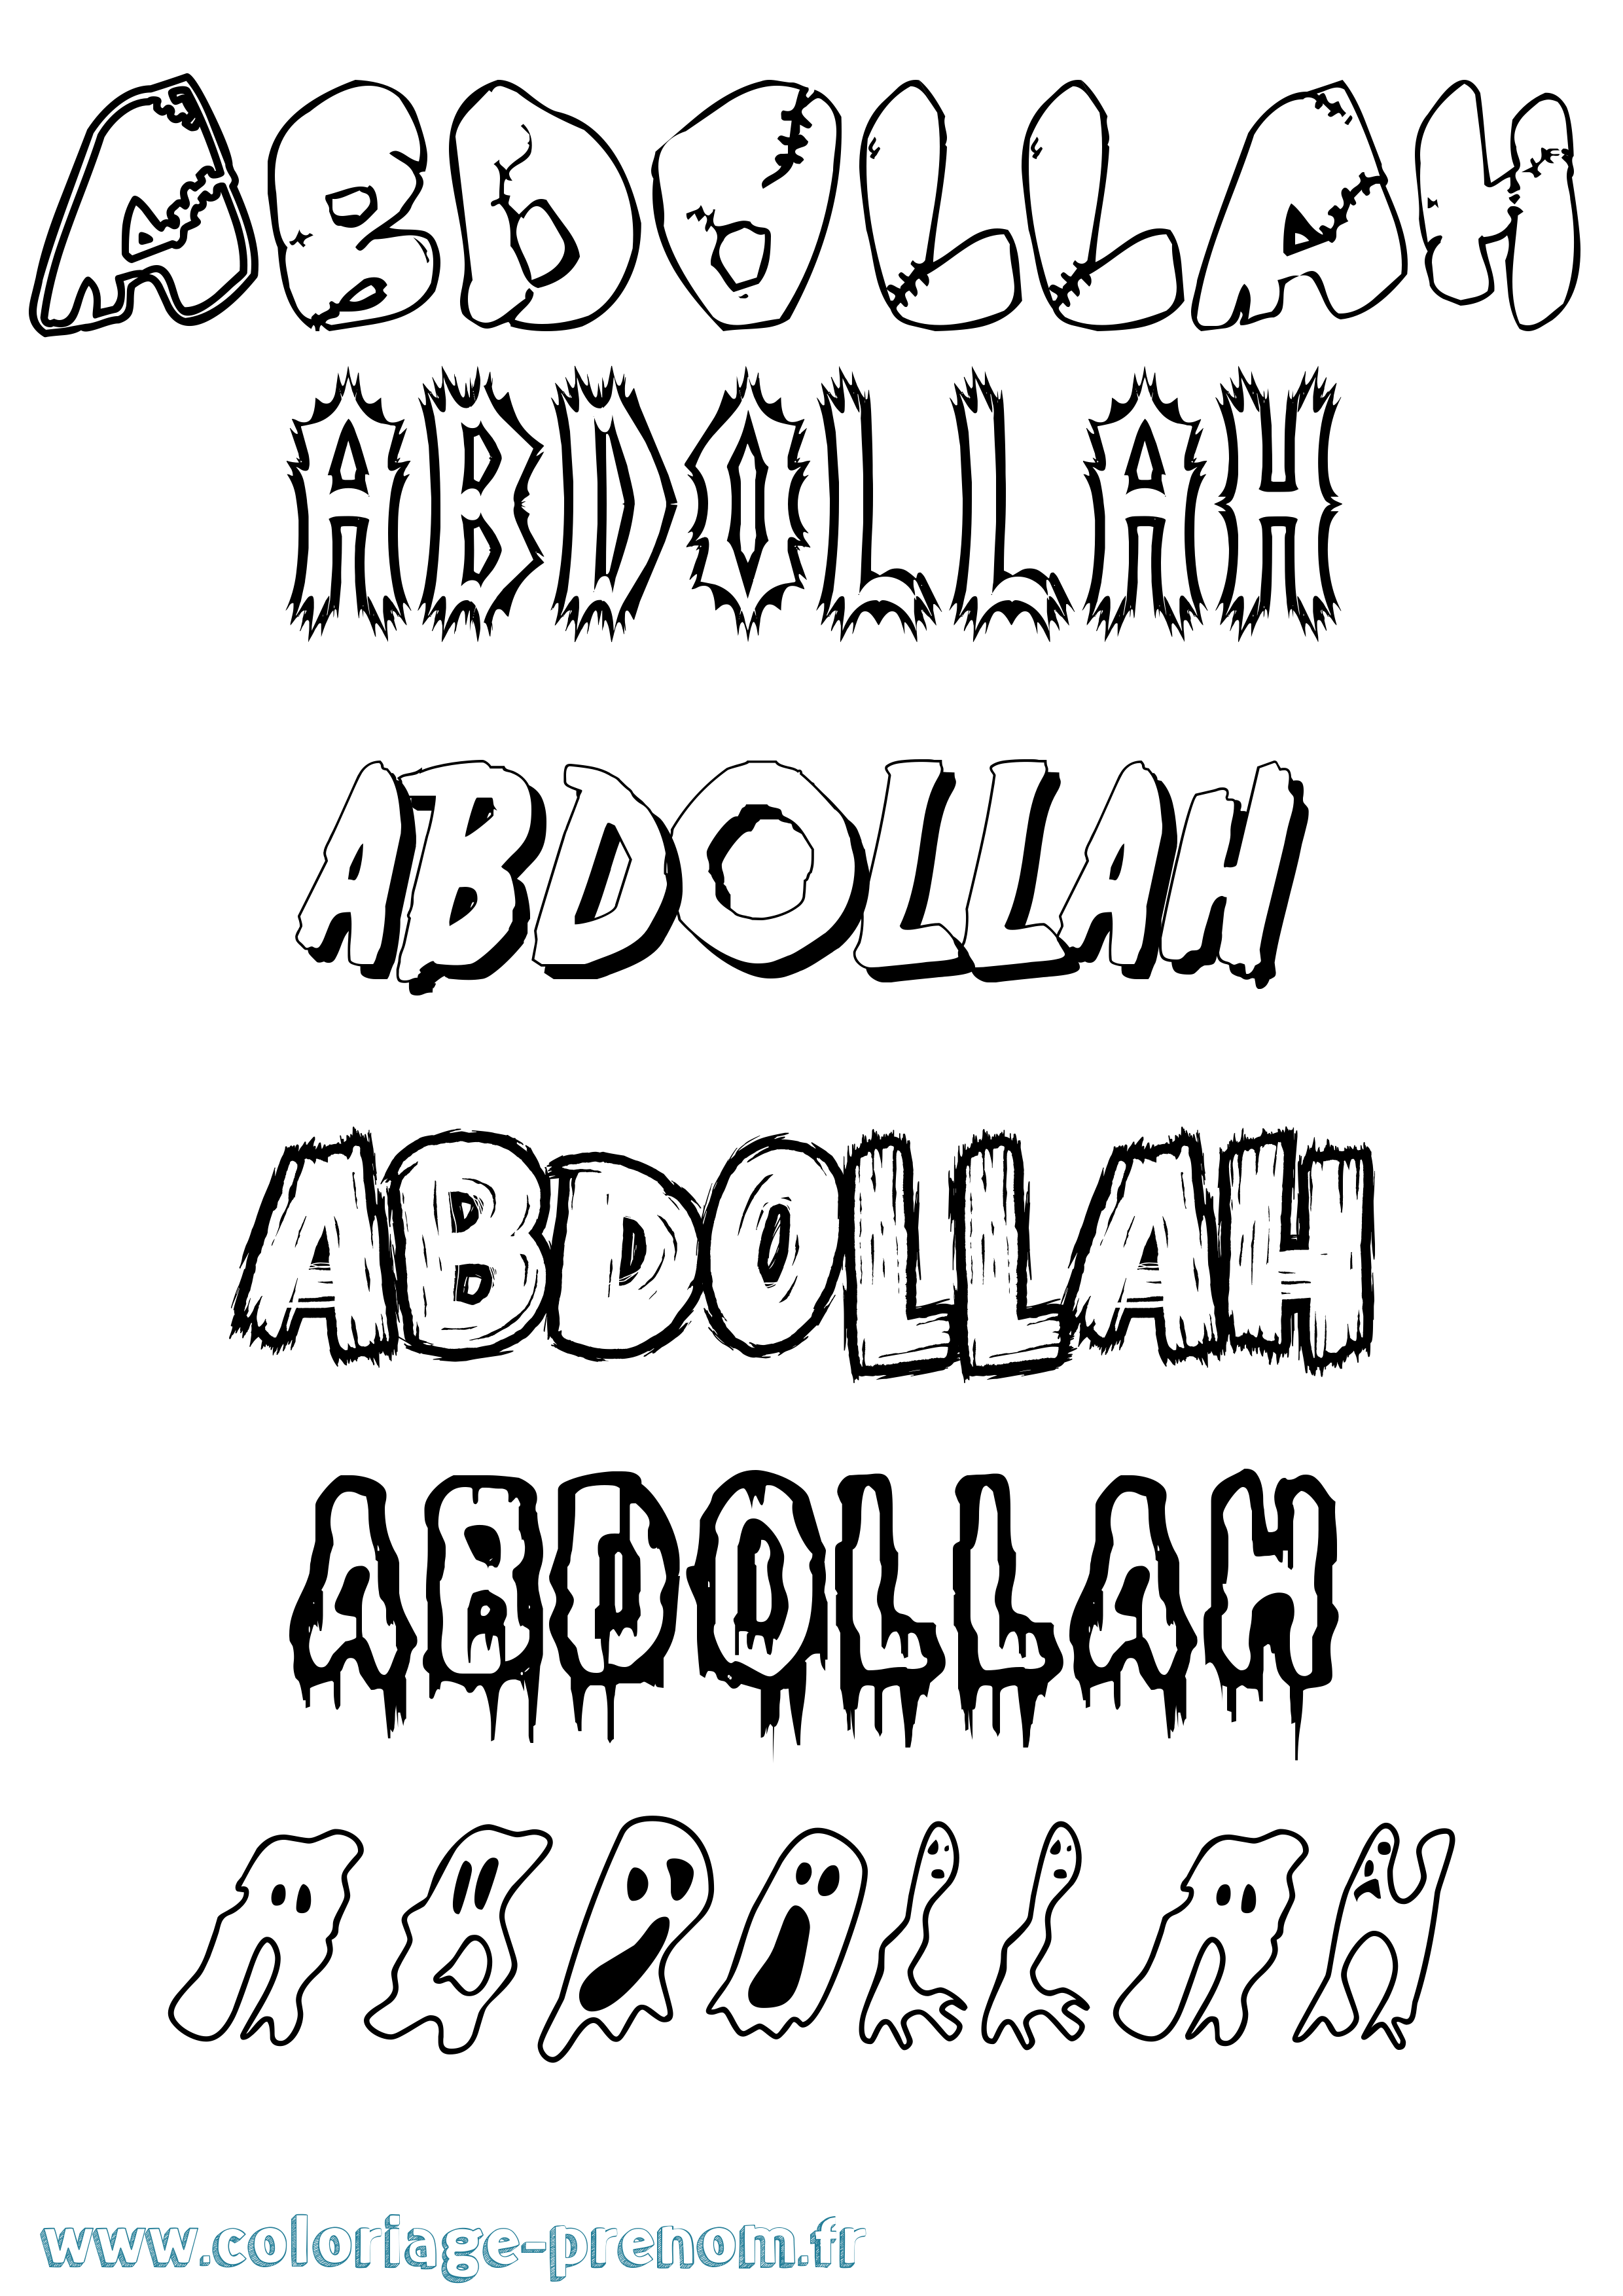 Coloriage prénom Abdollah Frisson